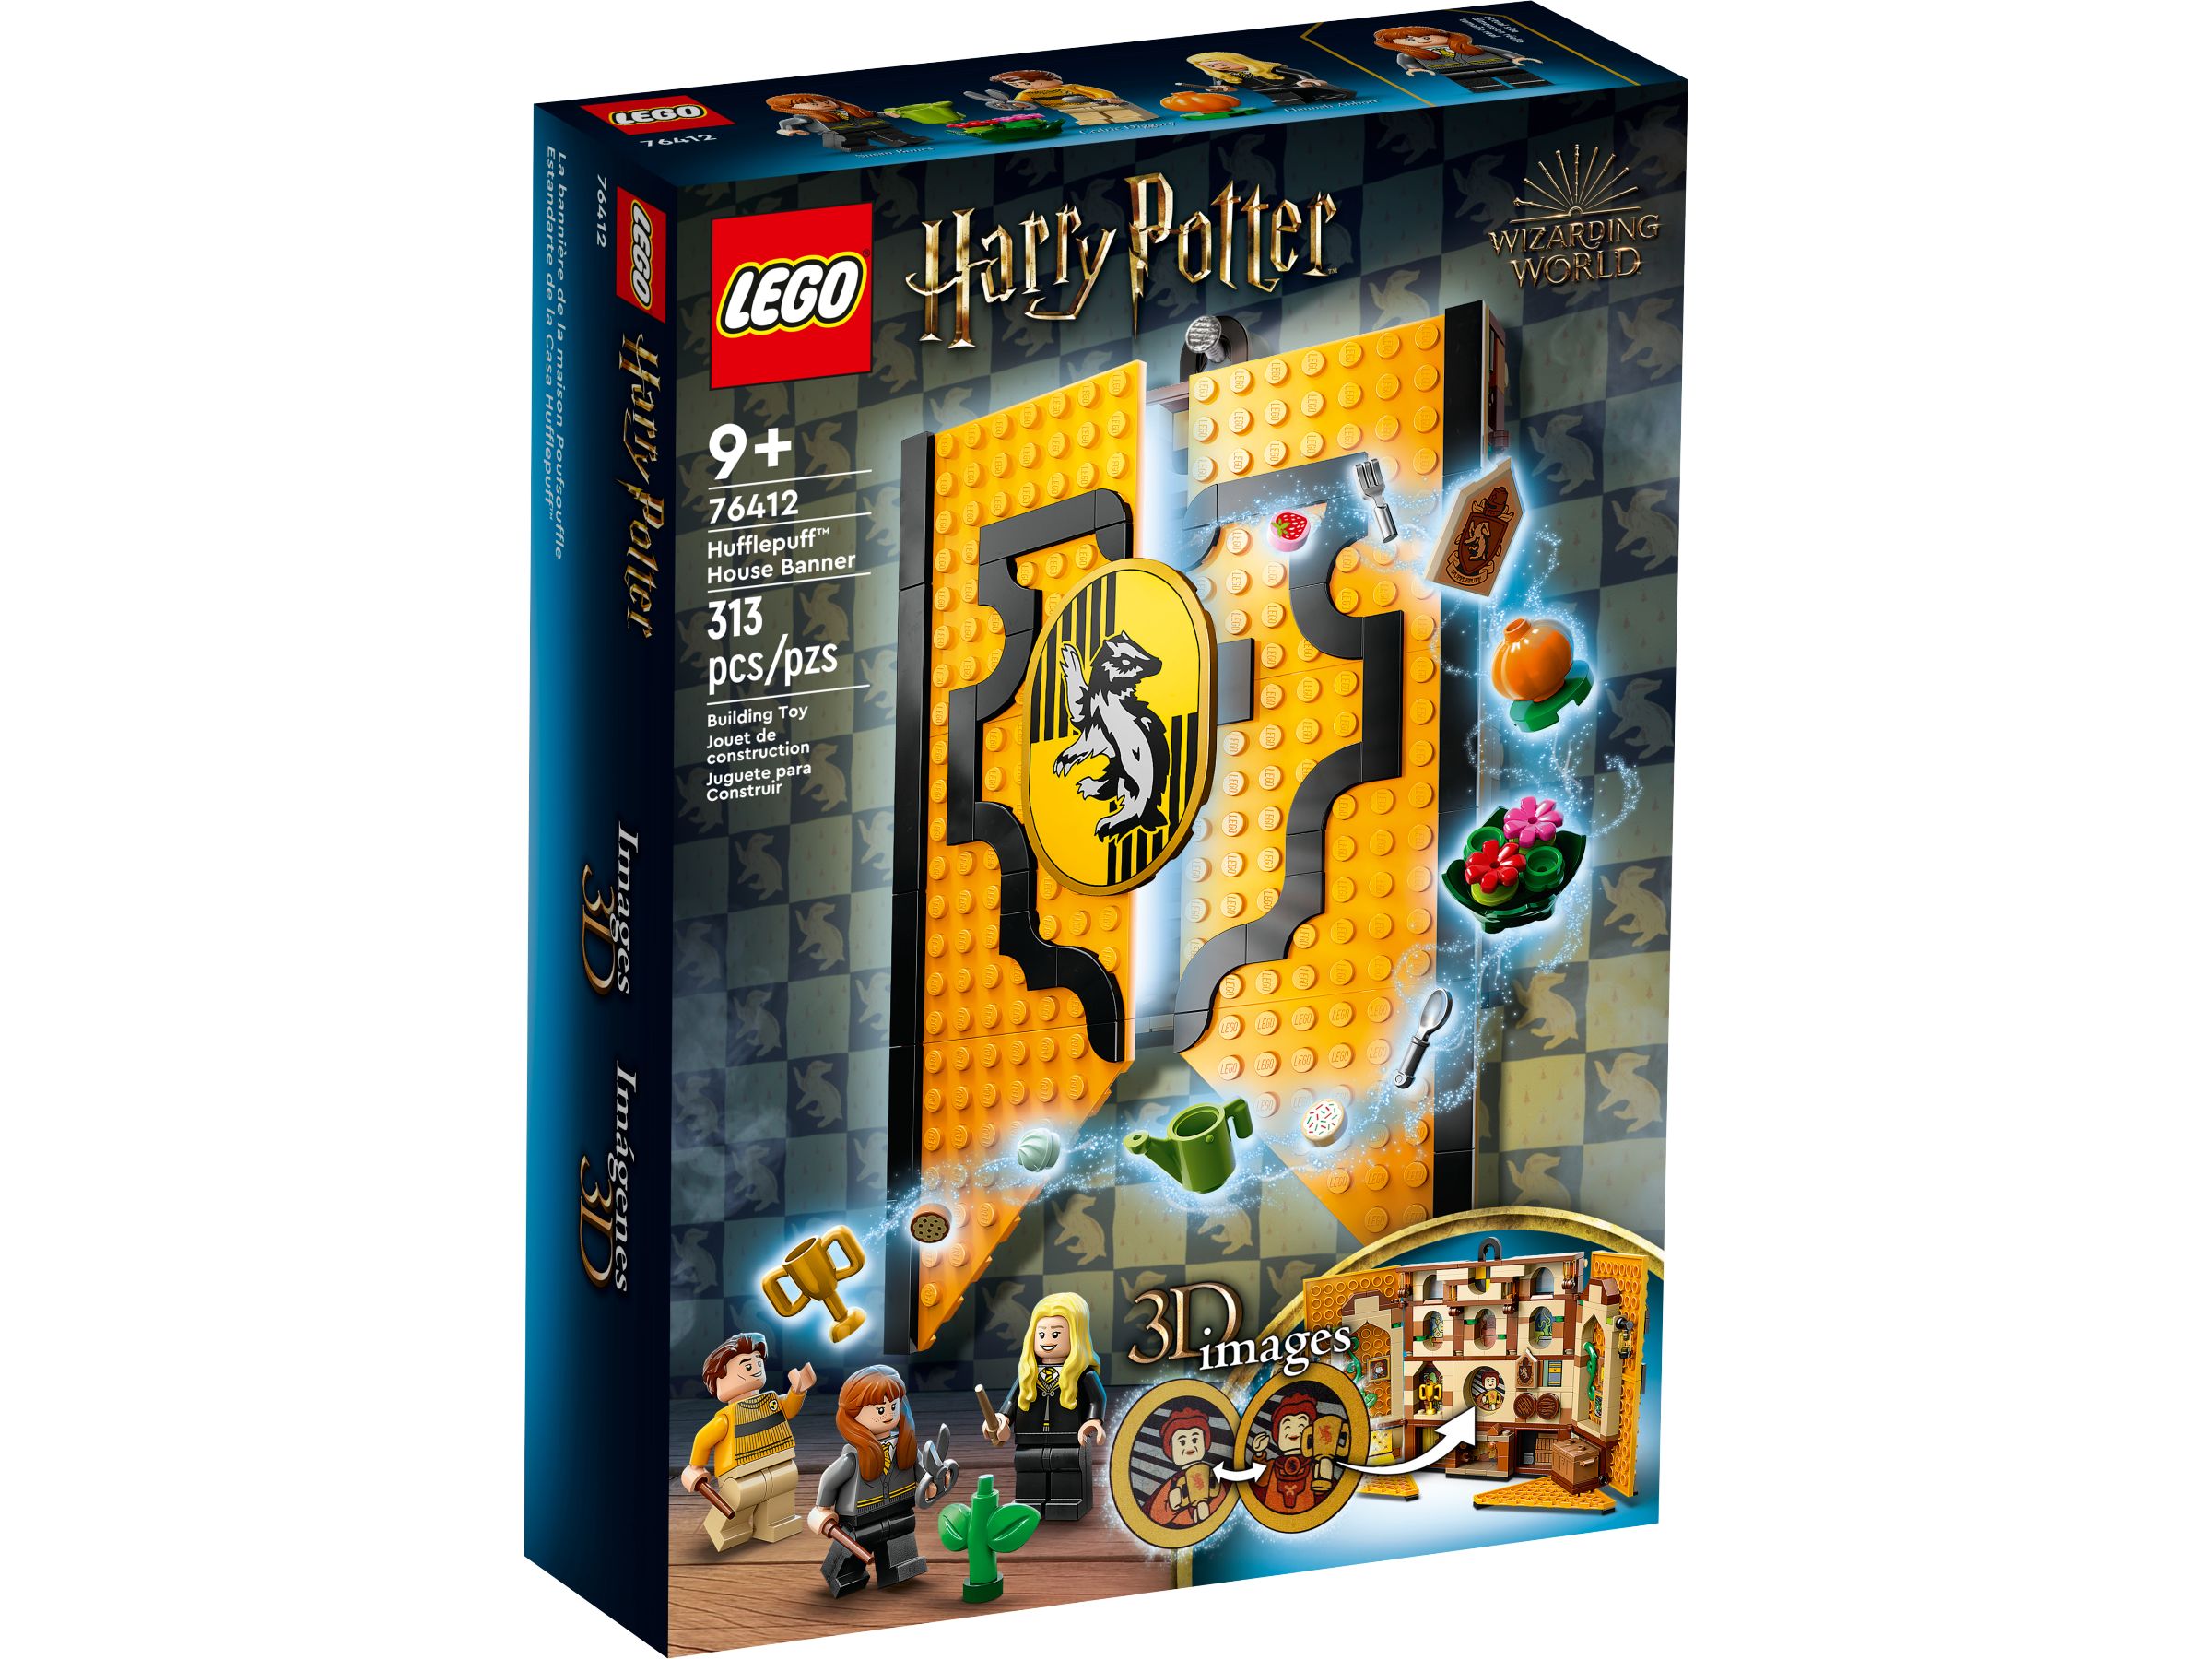 LEGO Harry Potter 76412 Hausbanner Hufflepuff™ LEGO_76412_alt1.jpg